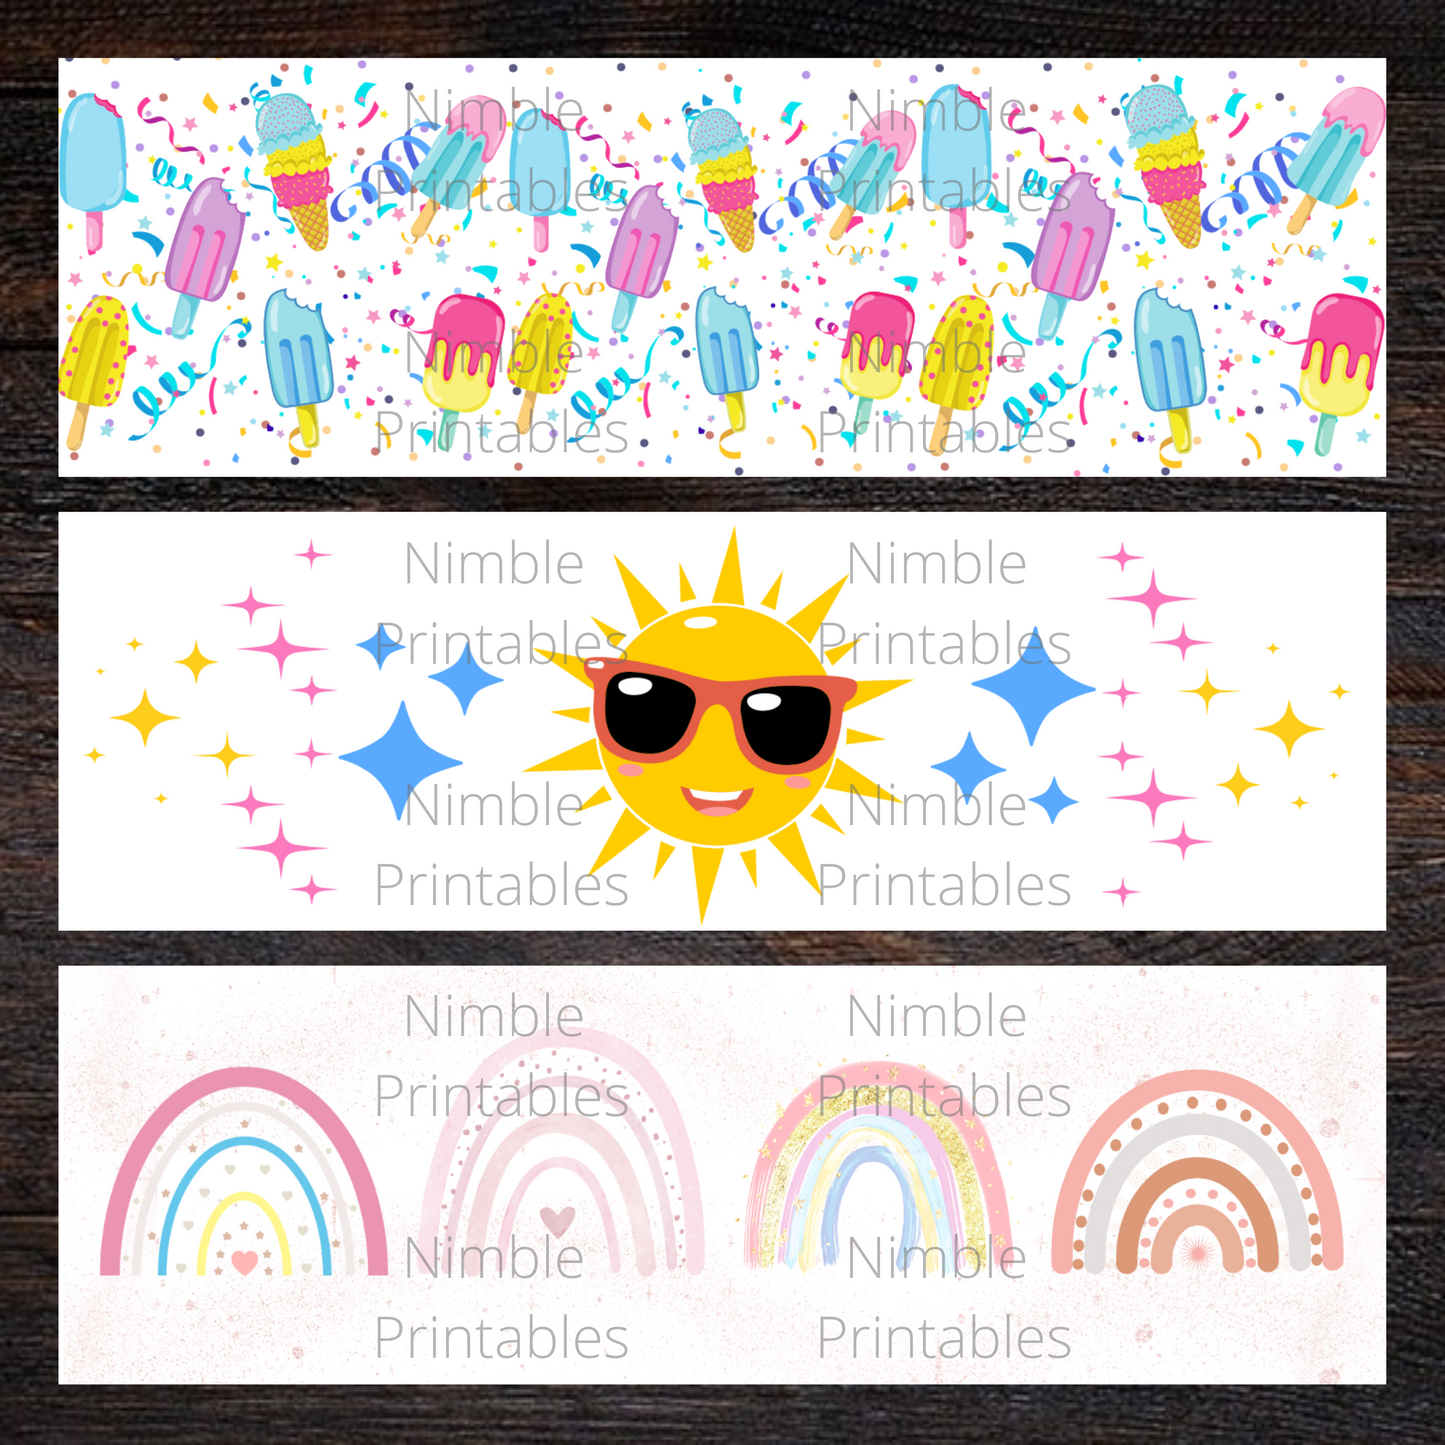 Pen Wraps Bundle Summer PNG, Pen Wrap PNG, Glitter PNG, Boho PNG, Rainbow PNG, Transparent Background, Digital Downloads, Instant Download